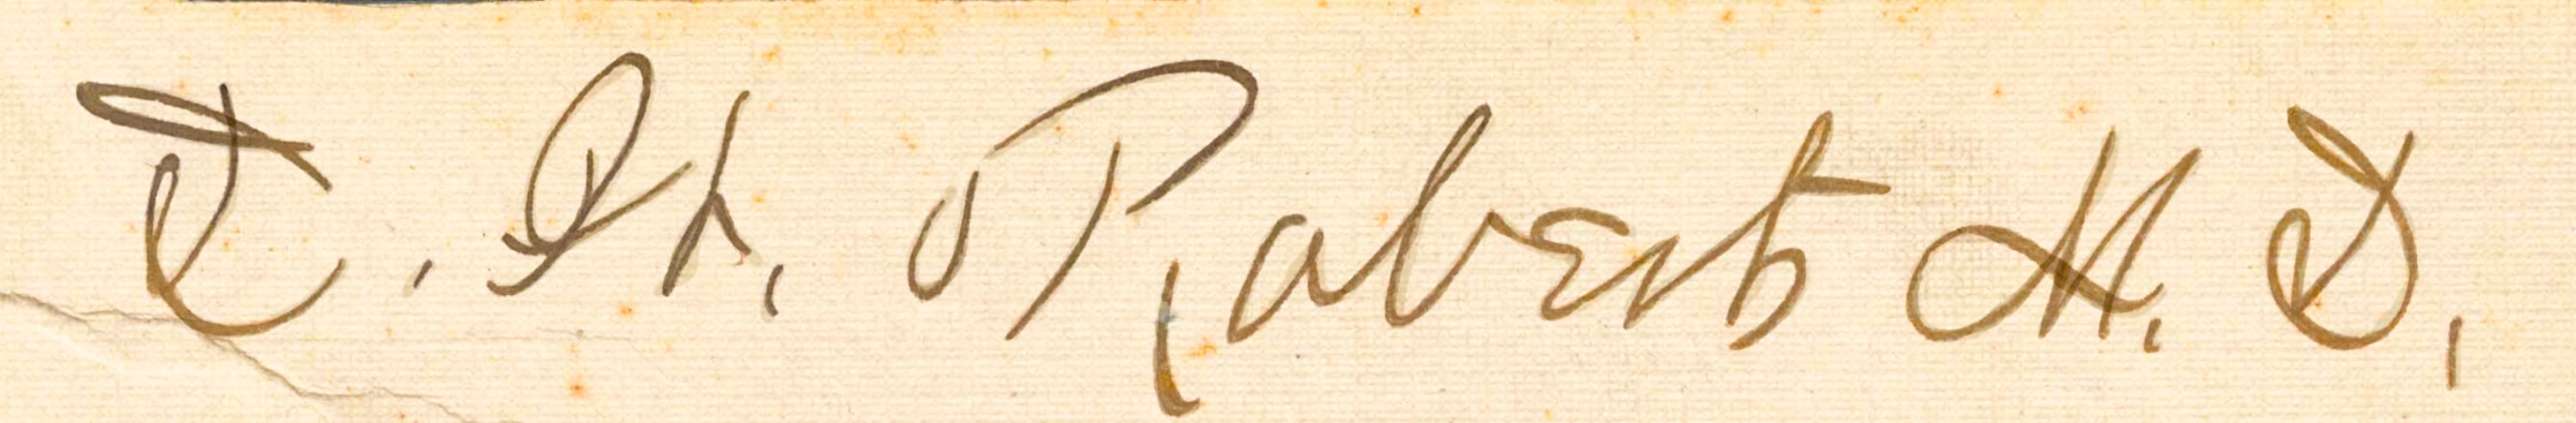 Close up of the cursive signature of Dr. D.W. Roberts.